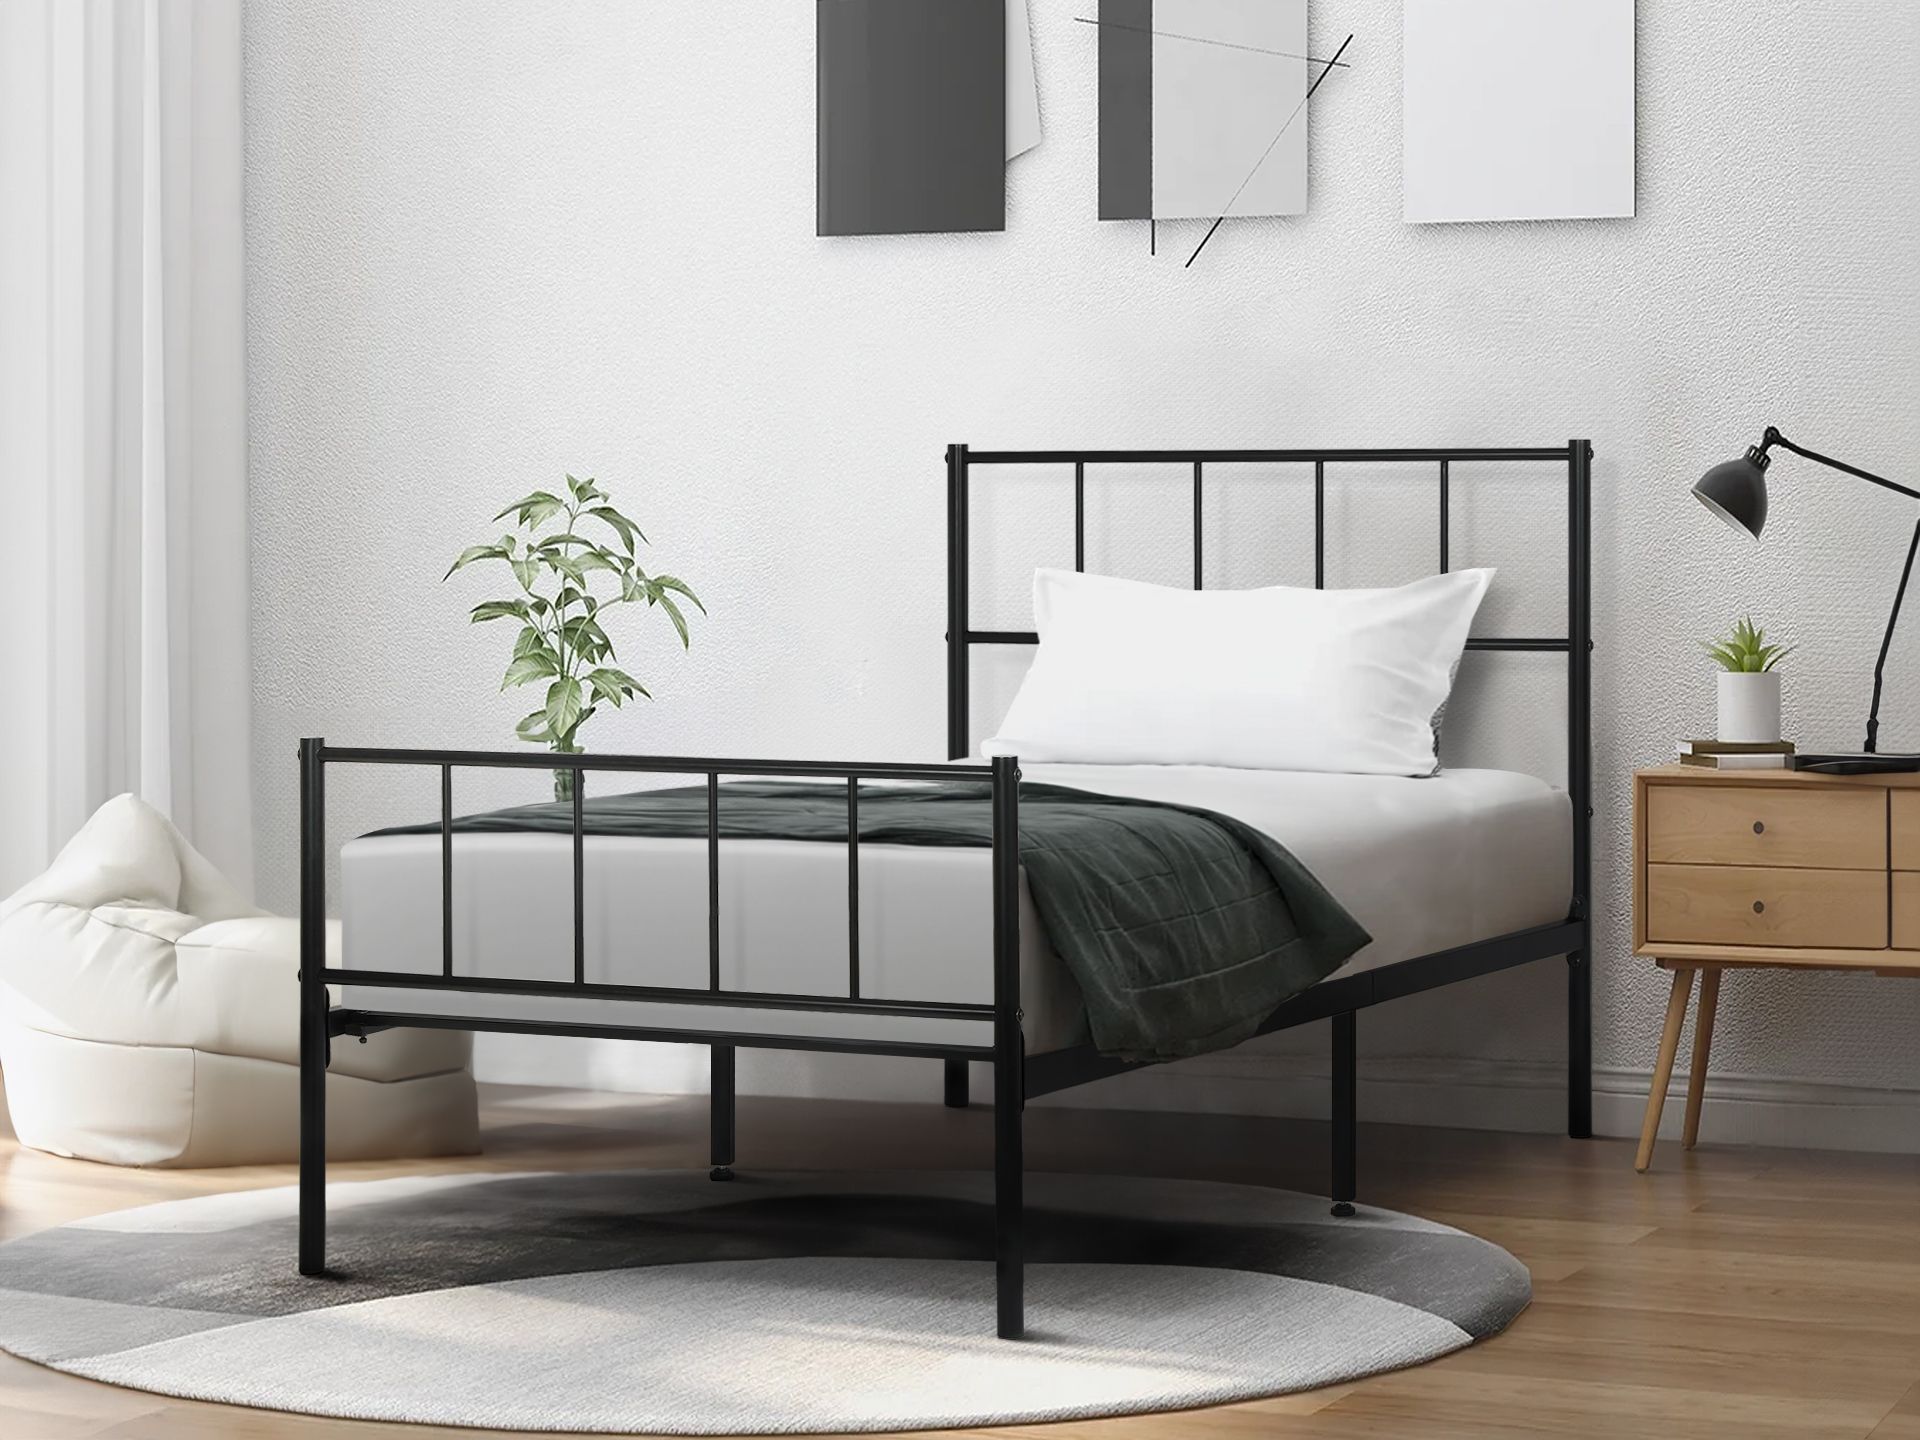 Keira Single Metal Bed Frame - Black